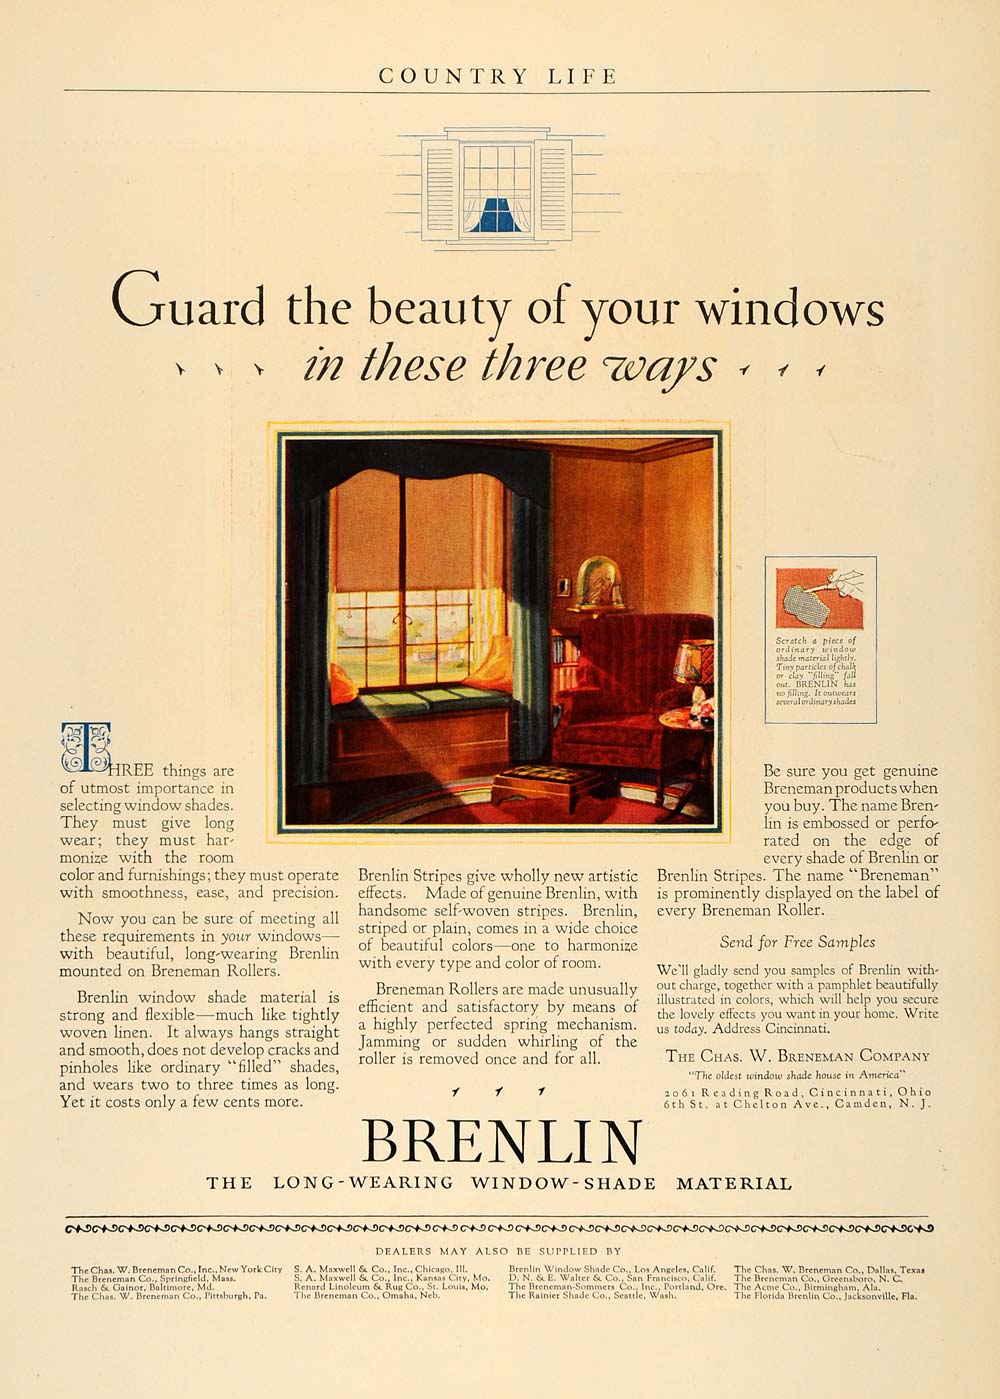 1927 Ad Brenlin Window Shade Chas W. Breneman Clay Ohio - ORIGINAL CL6